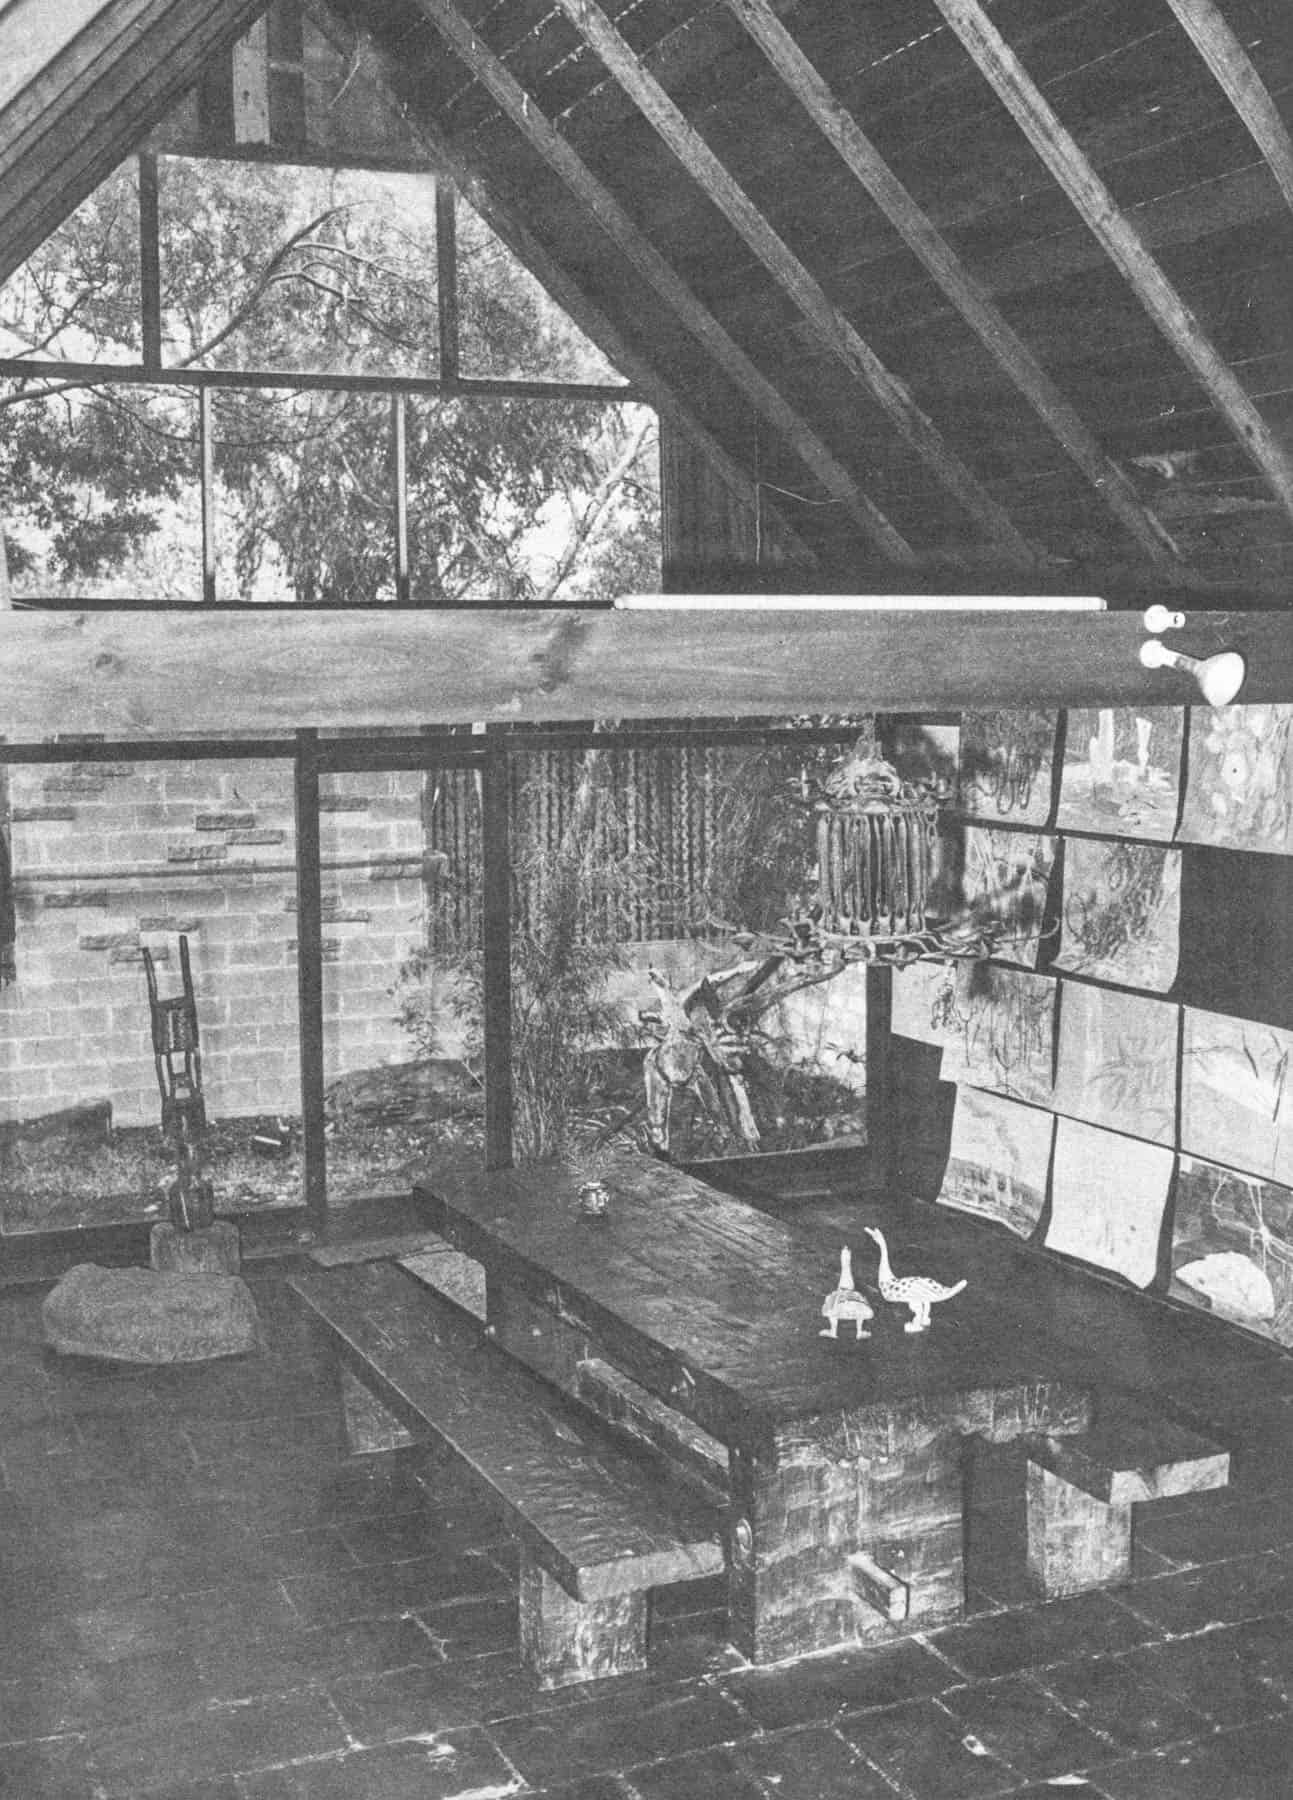 An interior view of Clifton Pugh's studio home